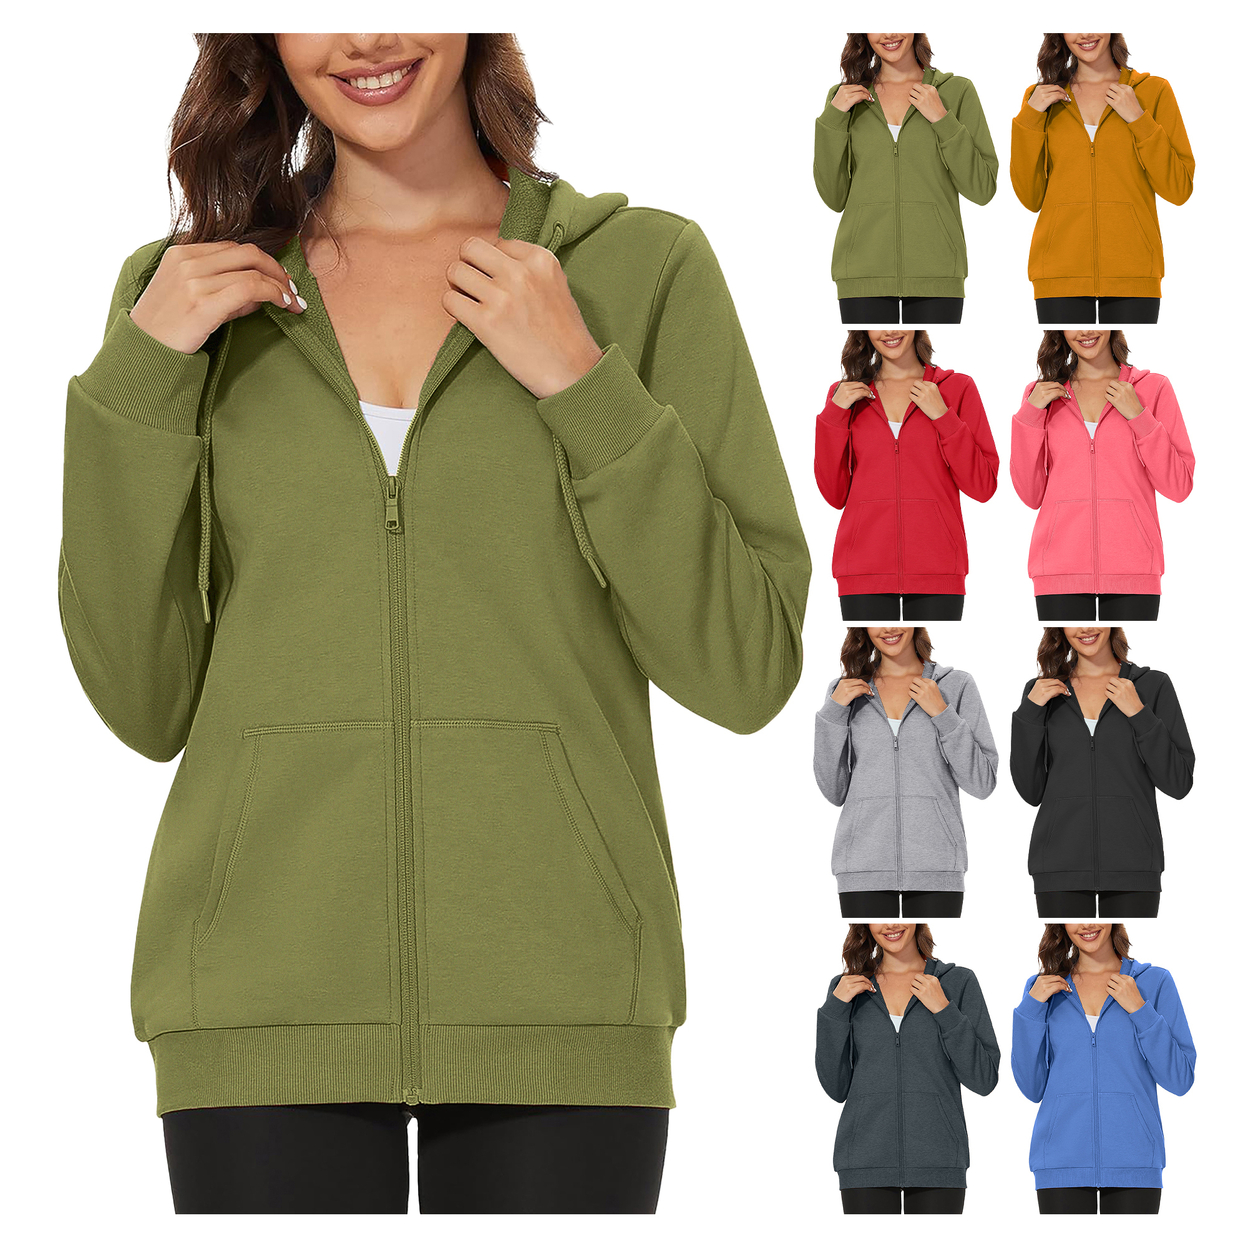 2-Pack: Women's Winter Warm Soft Blend Fleece Lined Full Zip Up Hoodie - Black & Grey, Small